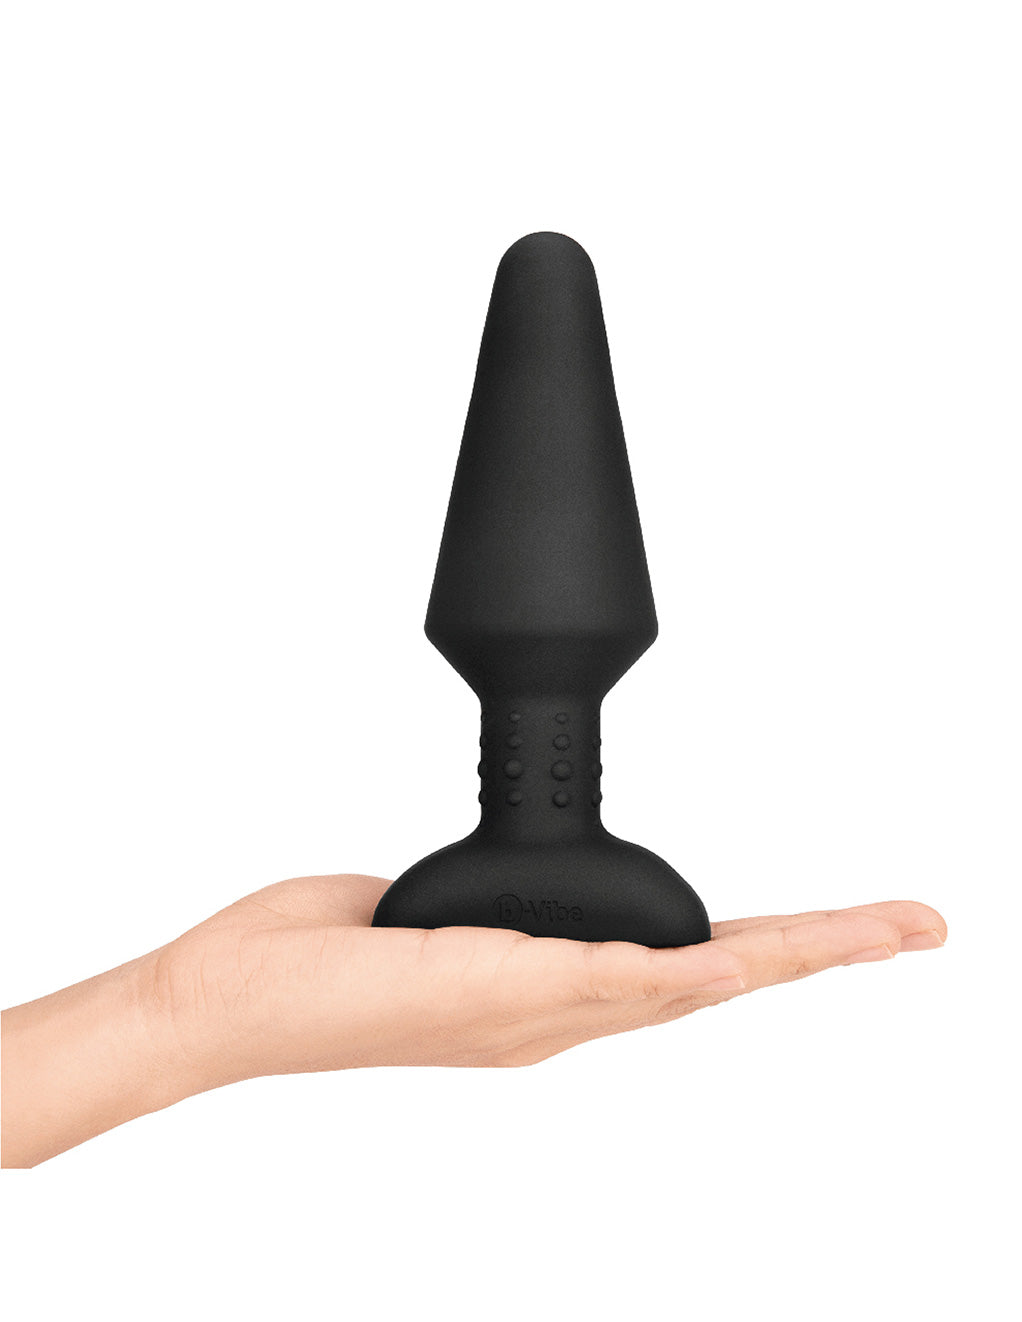 B-Vibe XL Rimming Butt Plug- Black- In hand